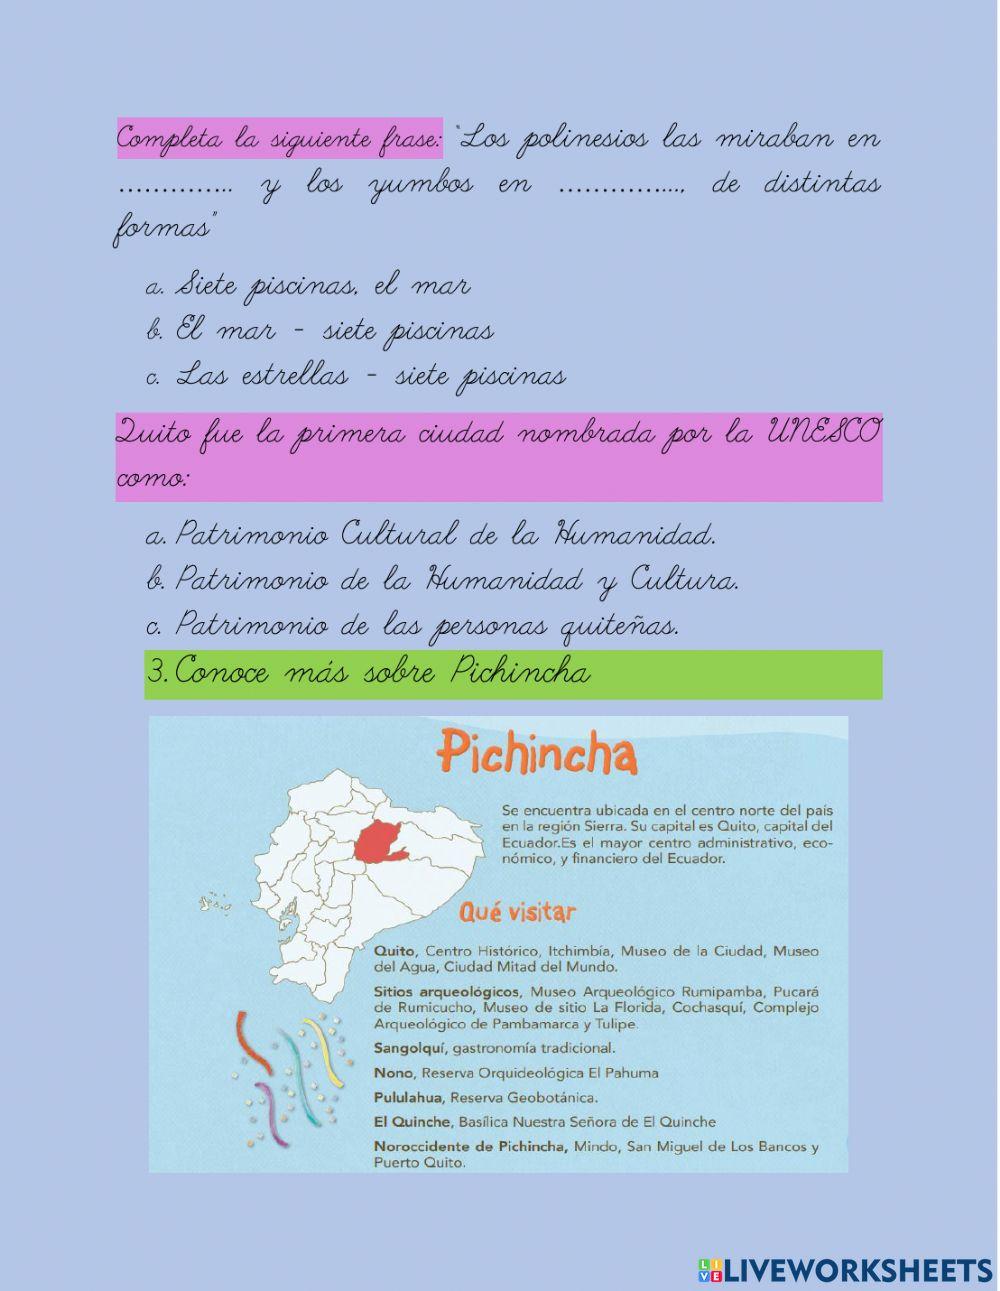 Conociendo sobre nuestra cultura Pichincha